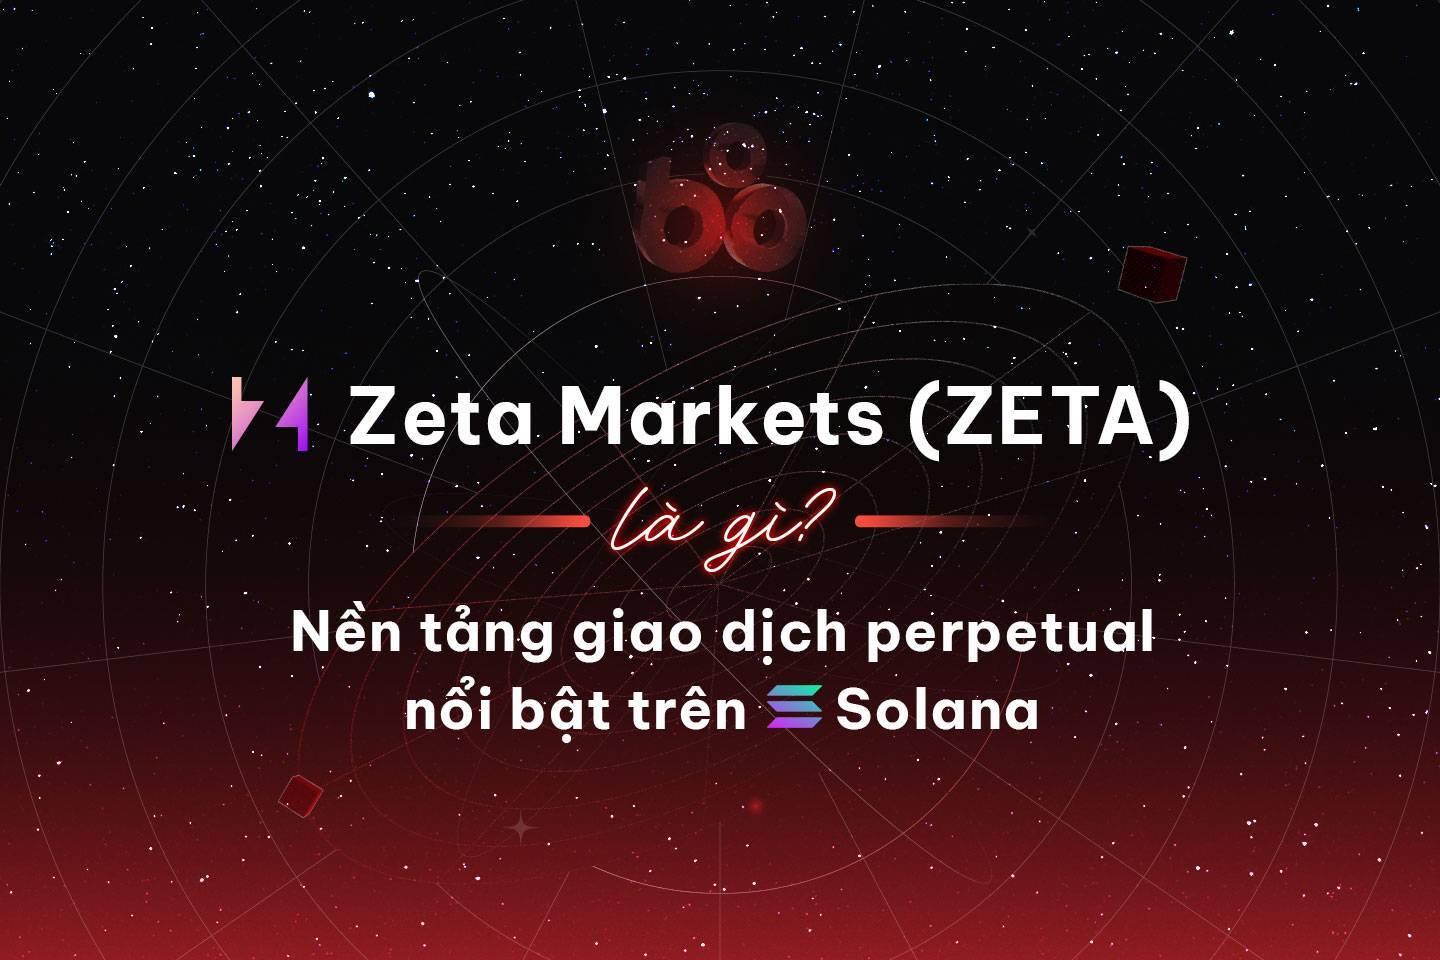 zeta-markets-zeta-la-gi-nen-tang-giao-dich-perpetual-noi-bat-tren-solana